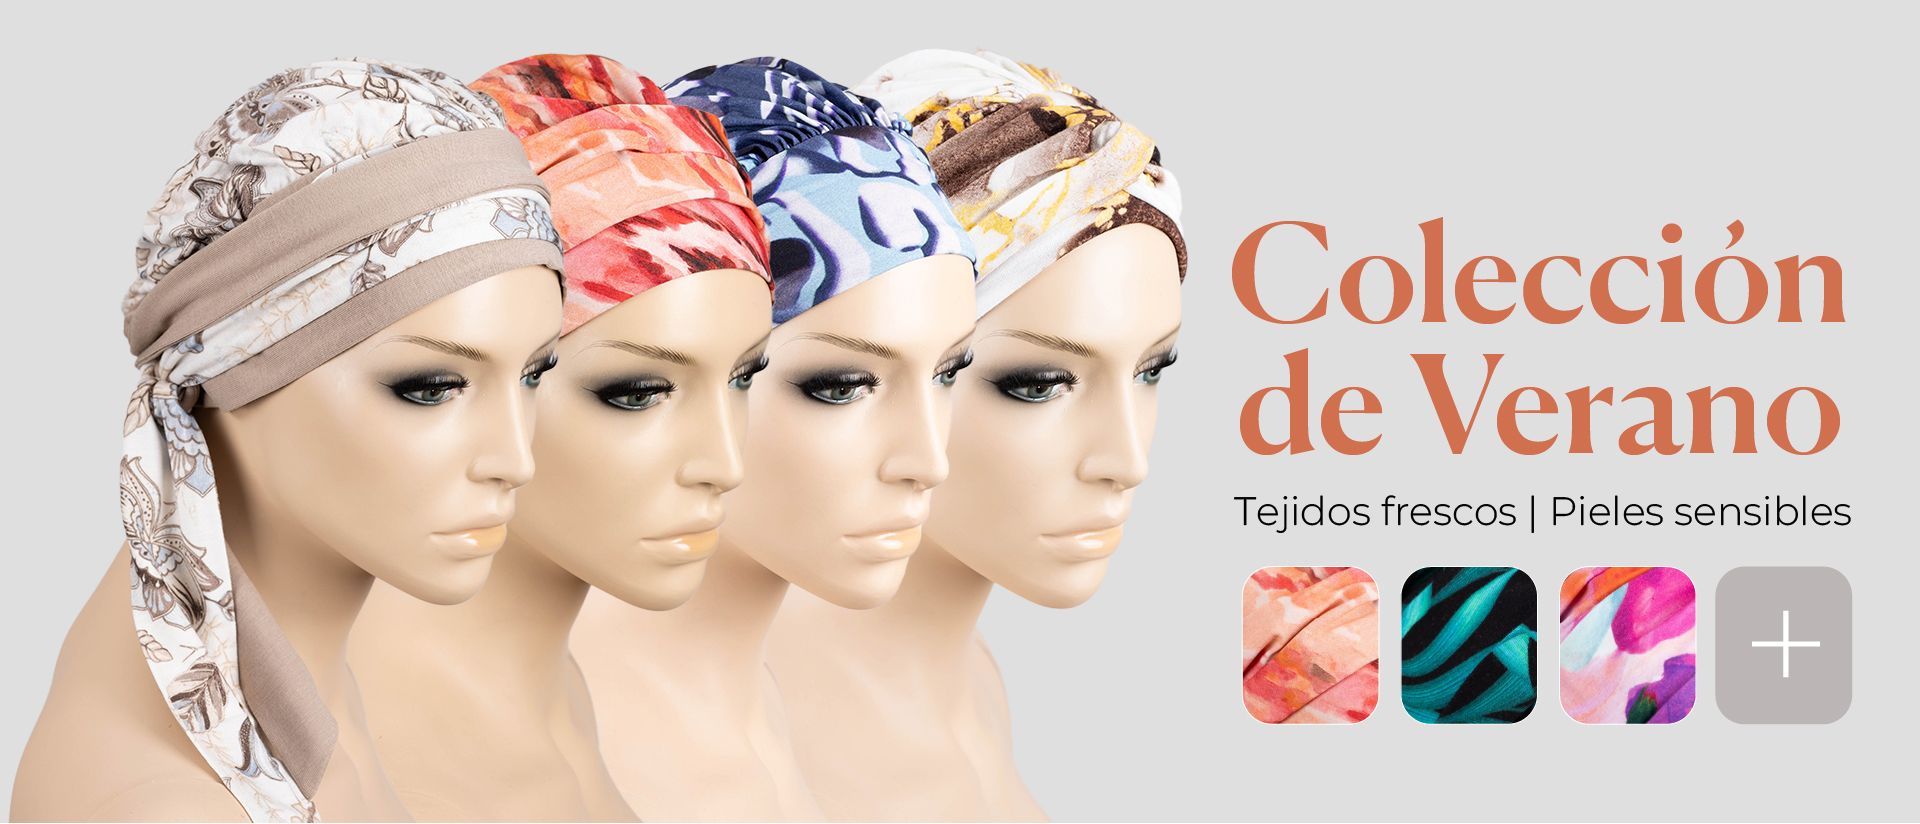 turbante-oncologico-riga-rokoko-turban-summer-collection-fresco-tejido-rebajas